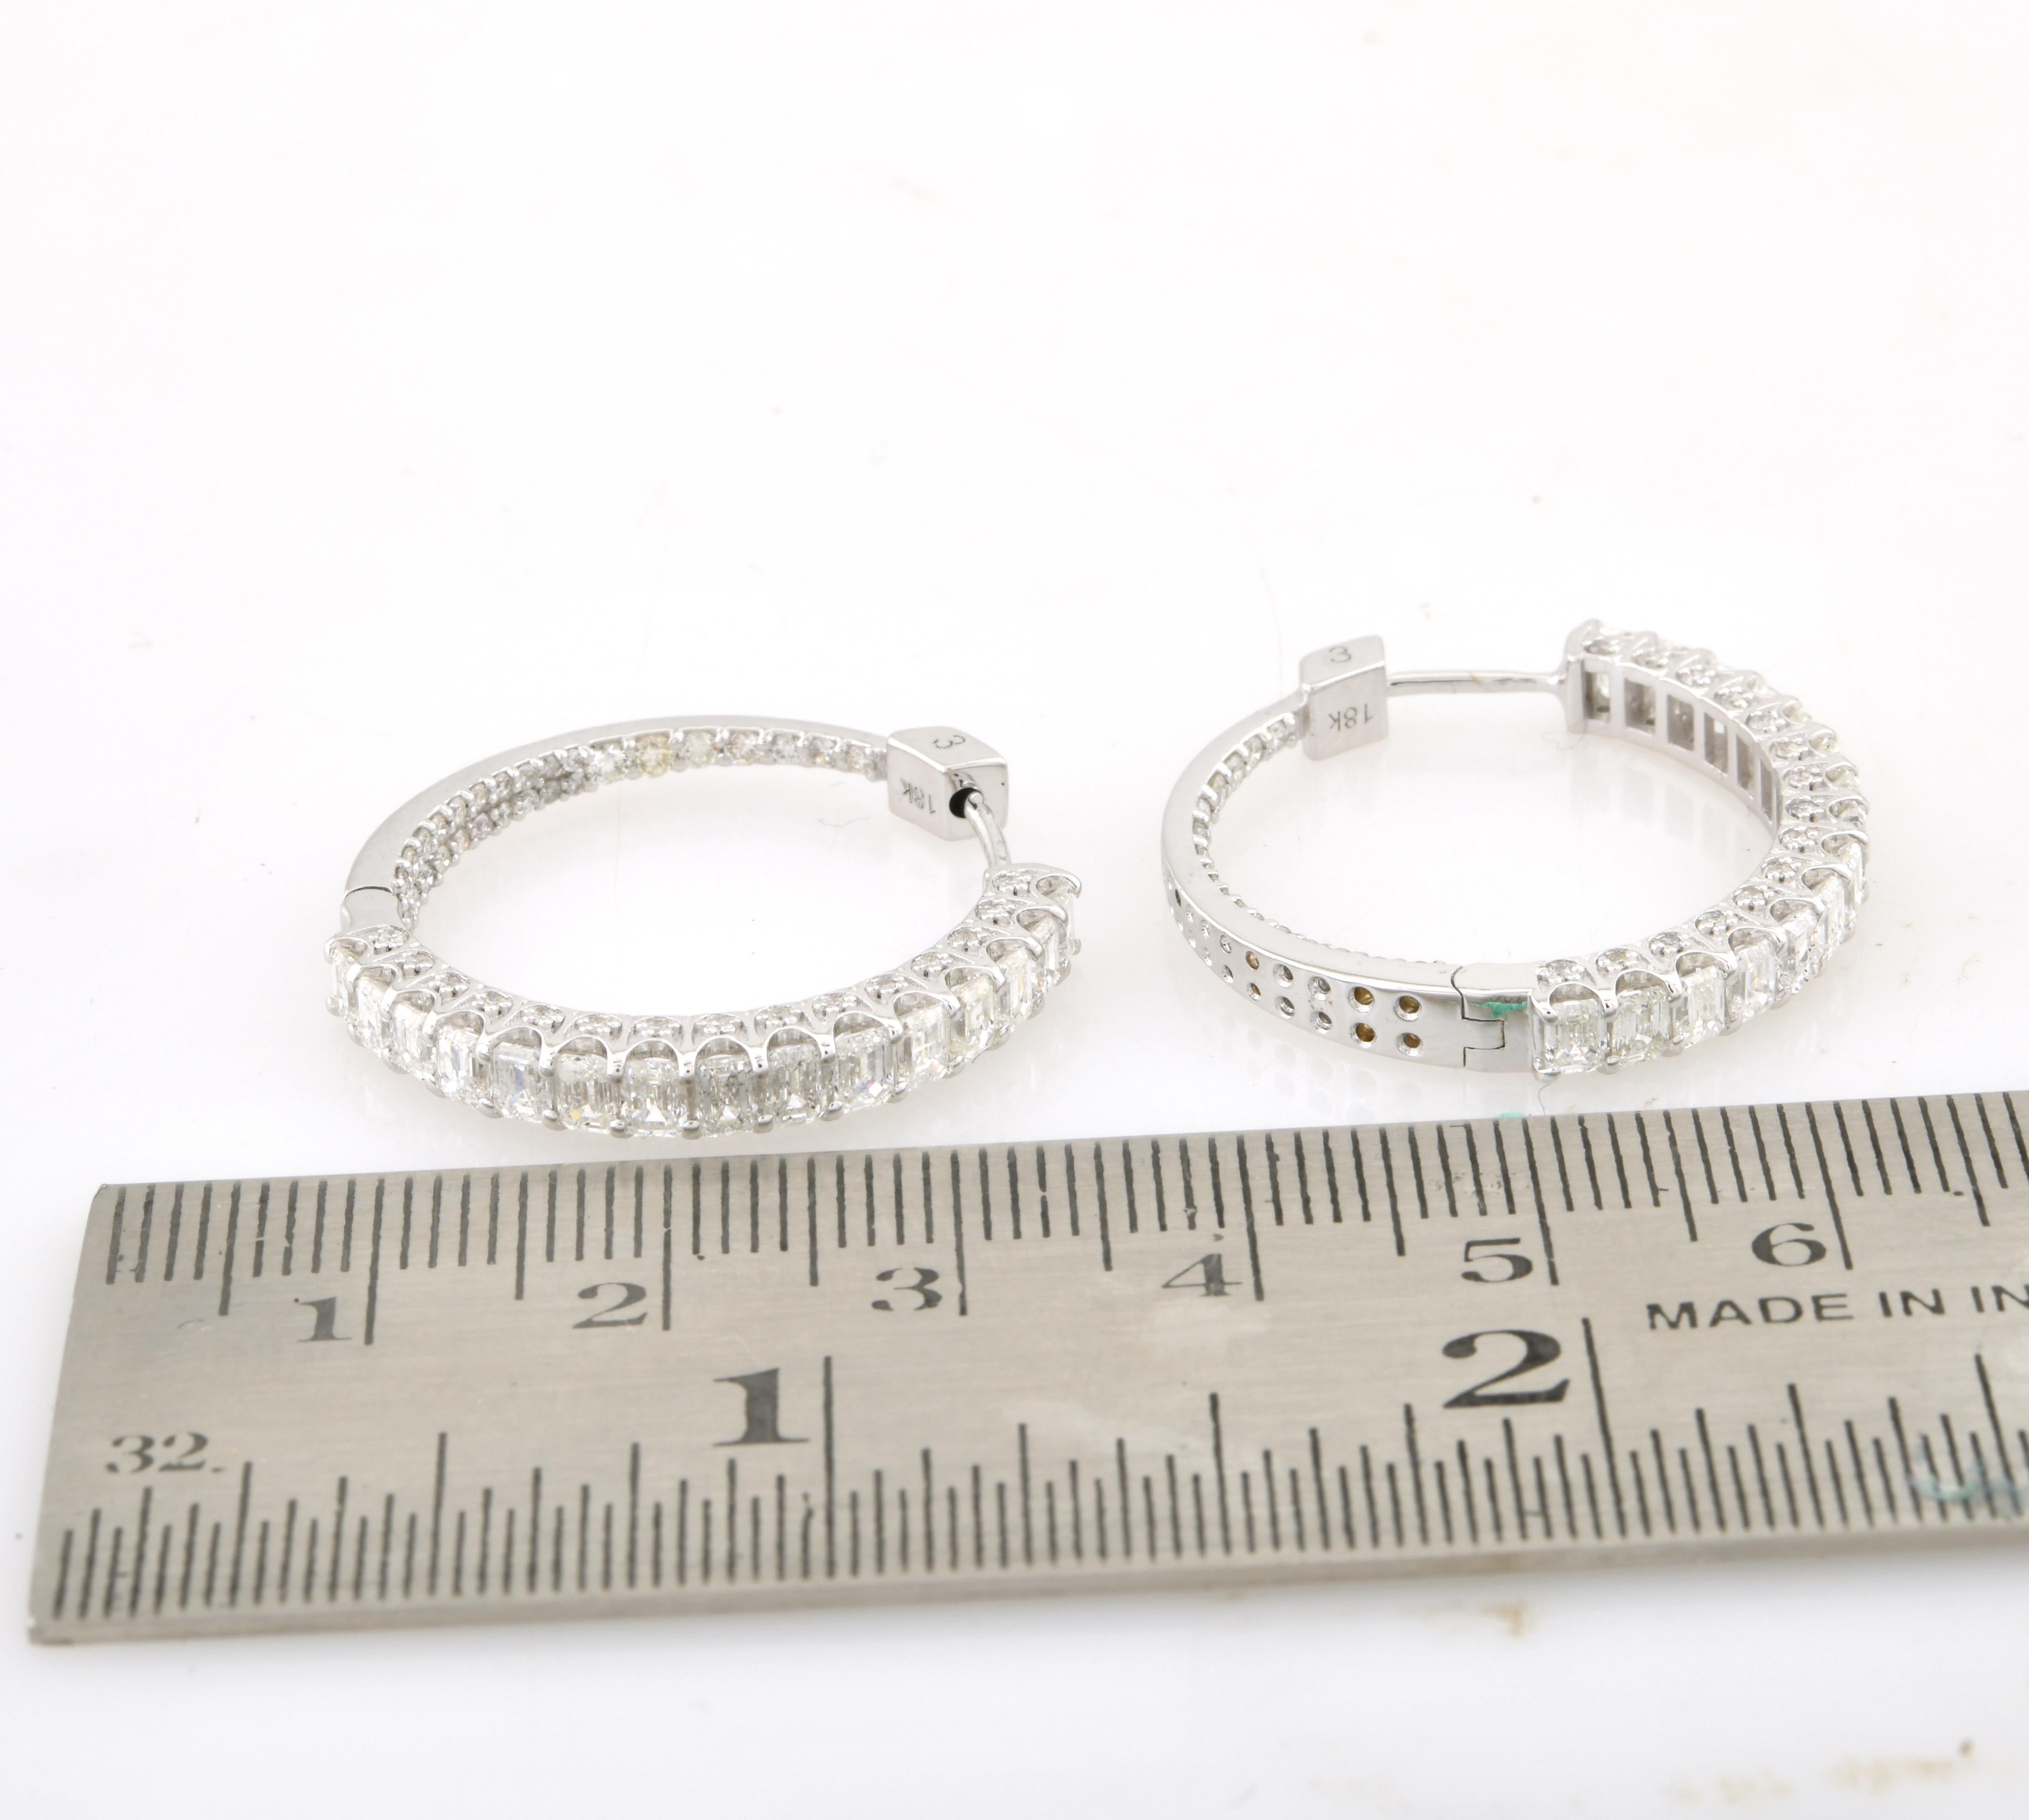 3.70 Carat Emerald Cut Diamond Hoop Earrings 14k White Gold Handmade Jewelry For Sale 1